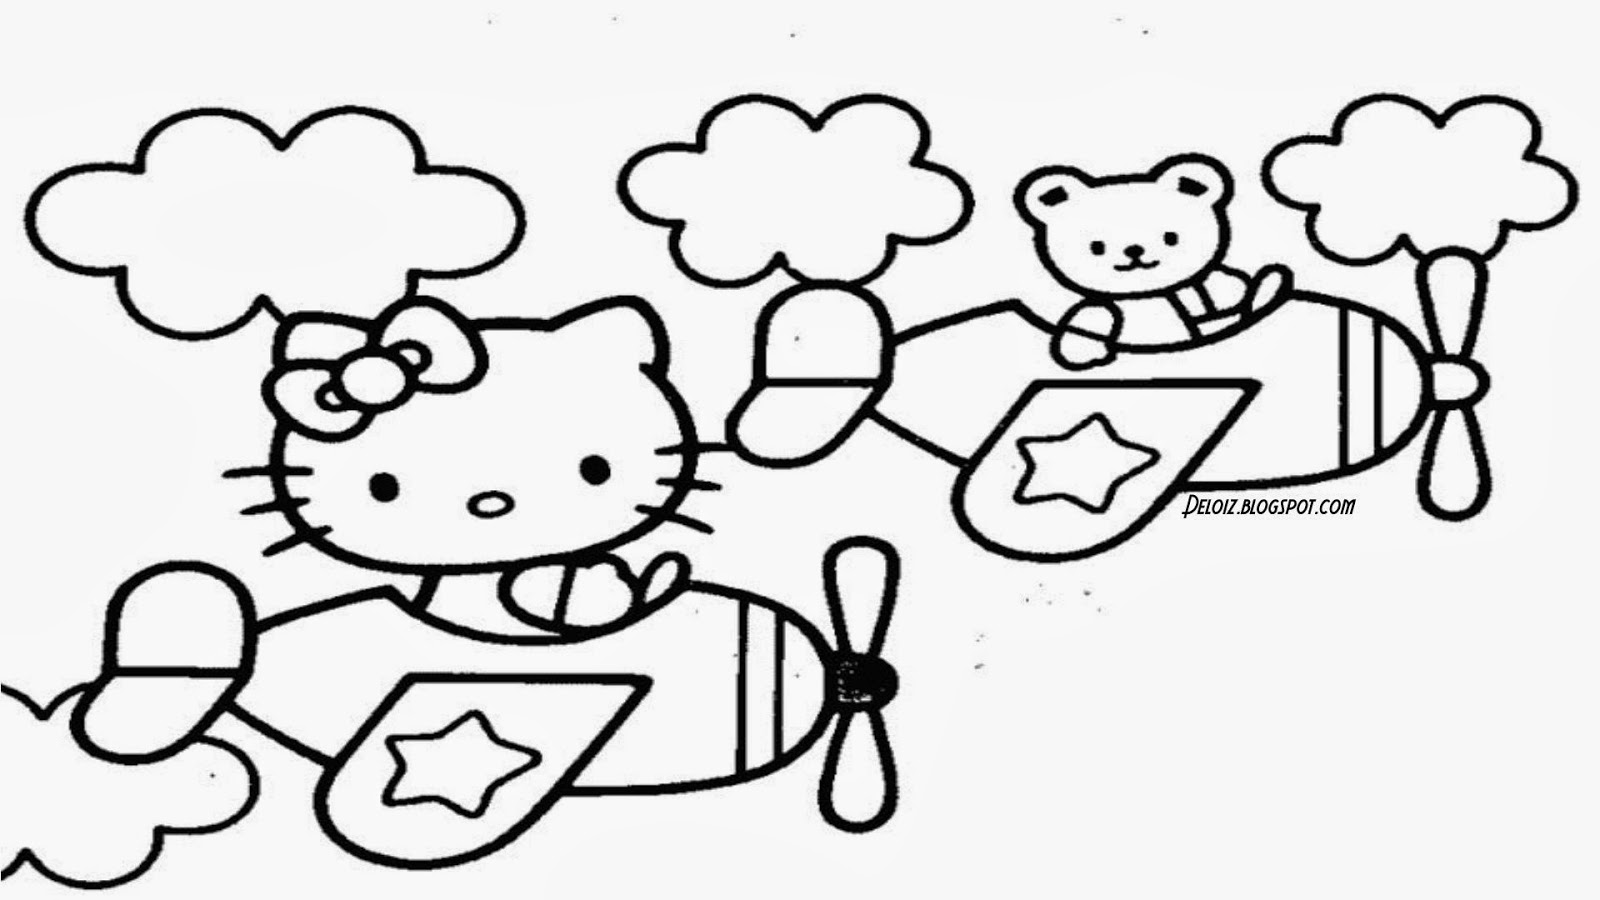  Gambar Hello Kitty Untuk Diwarnai